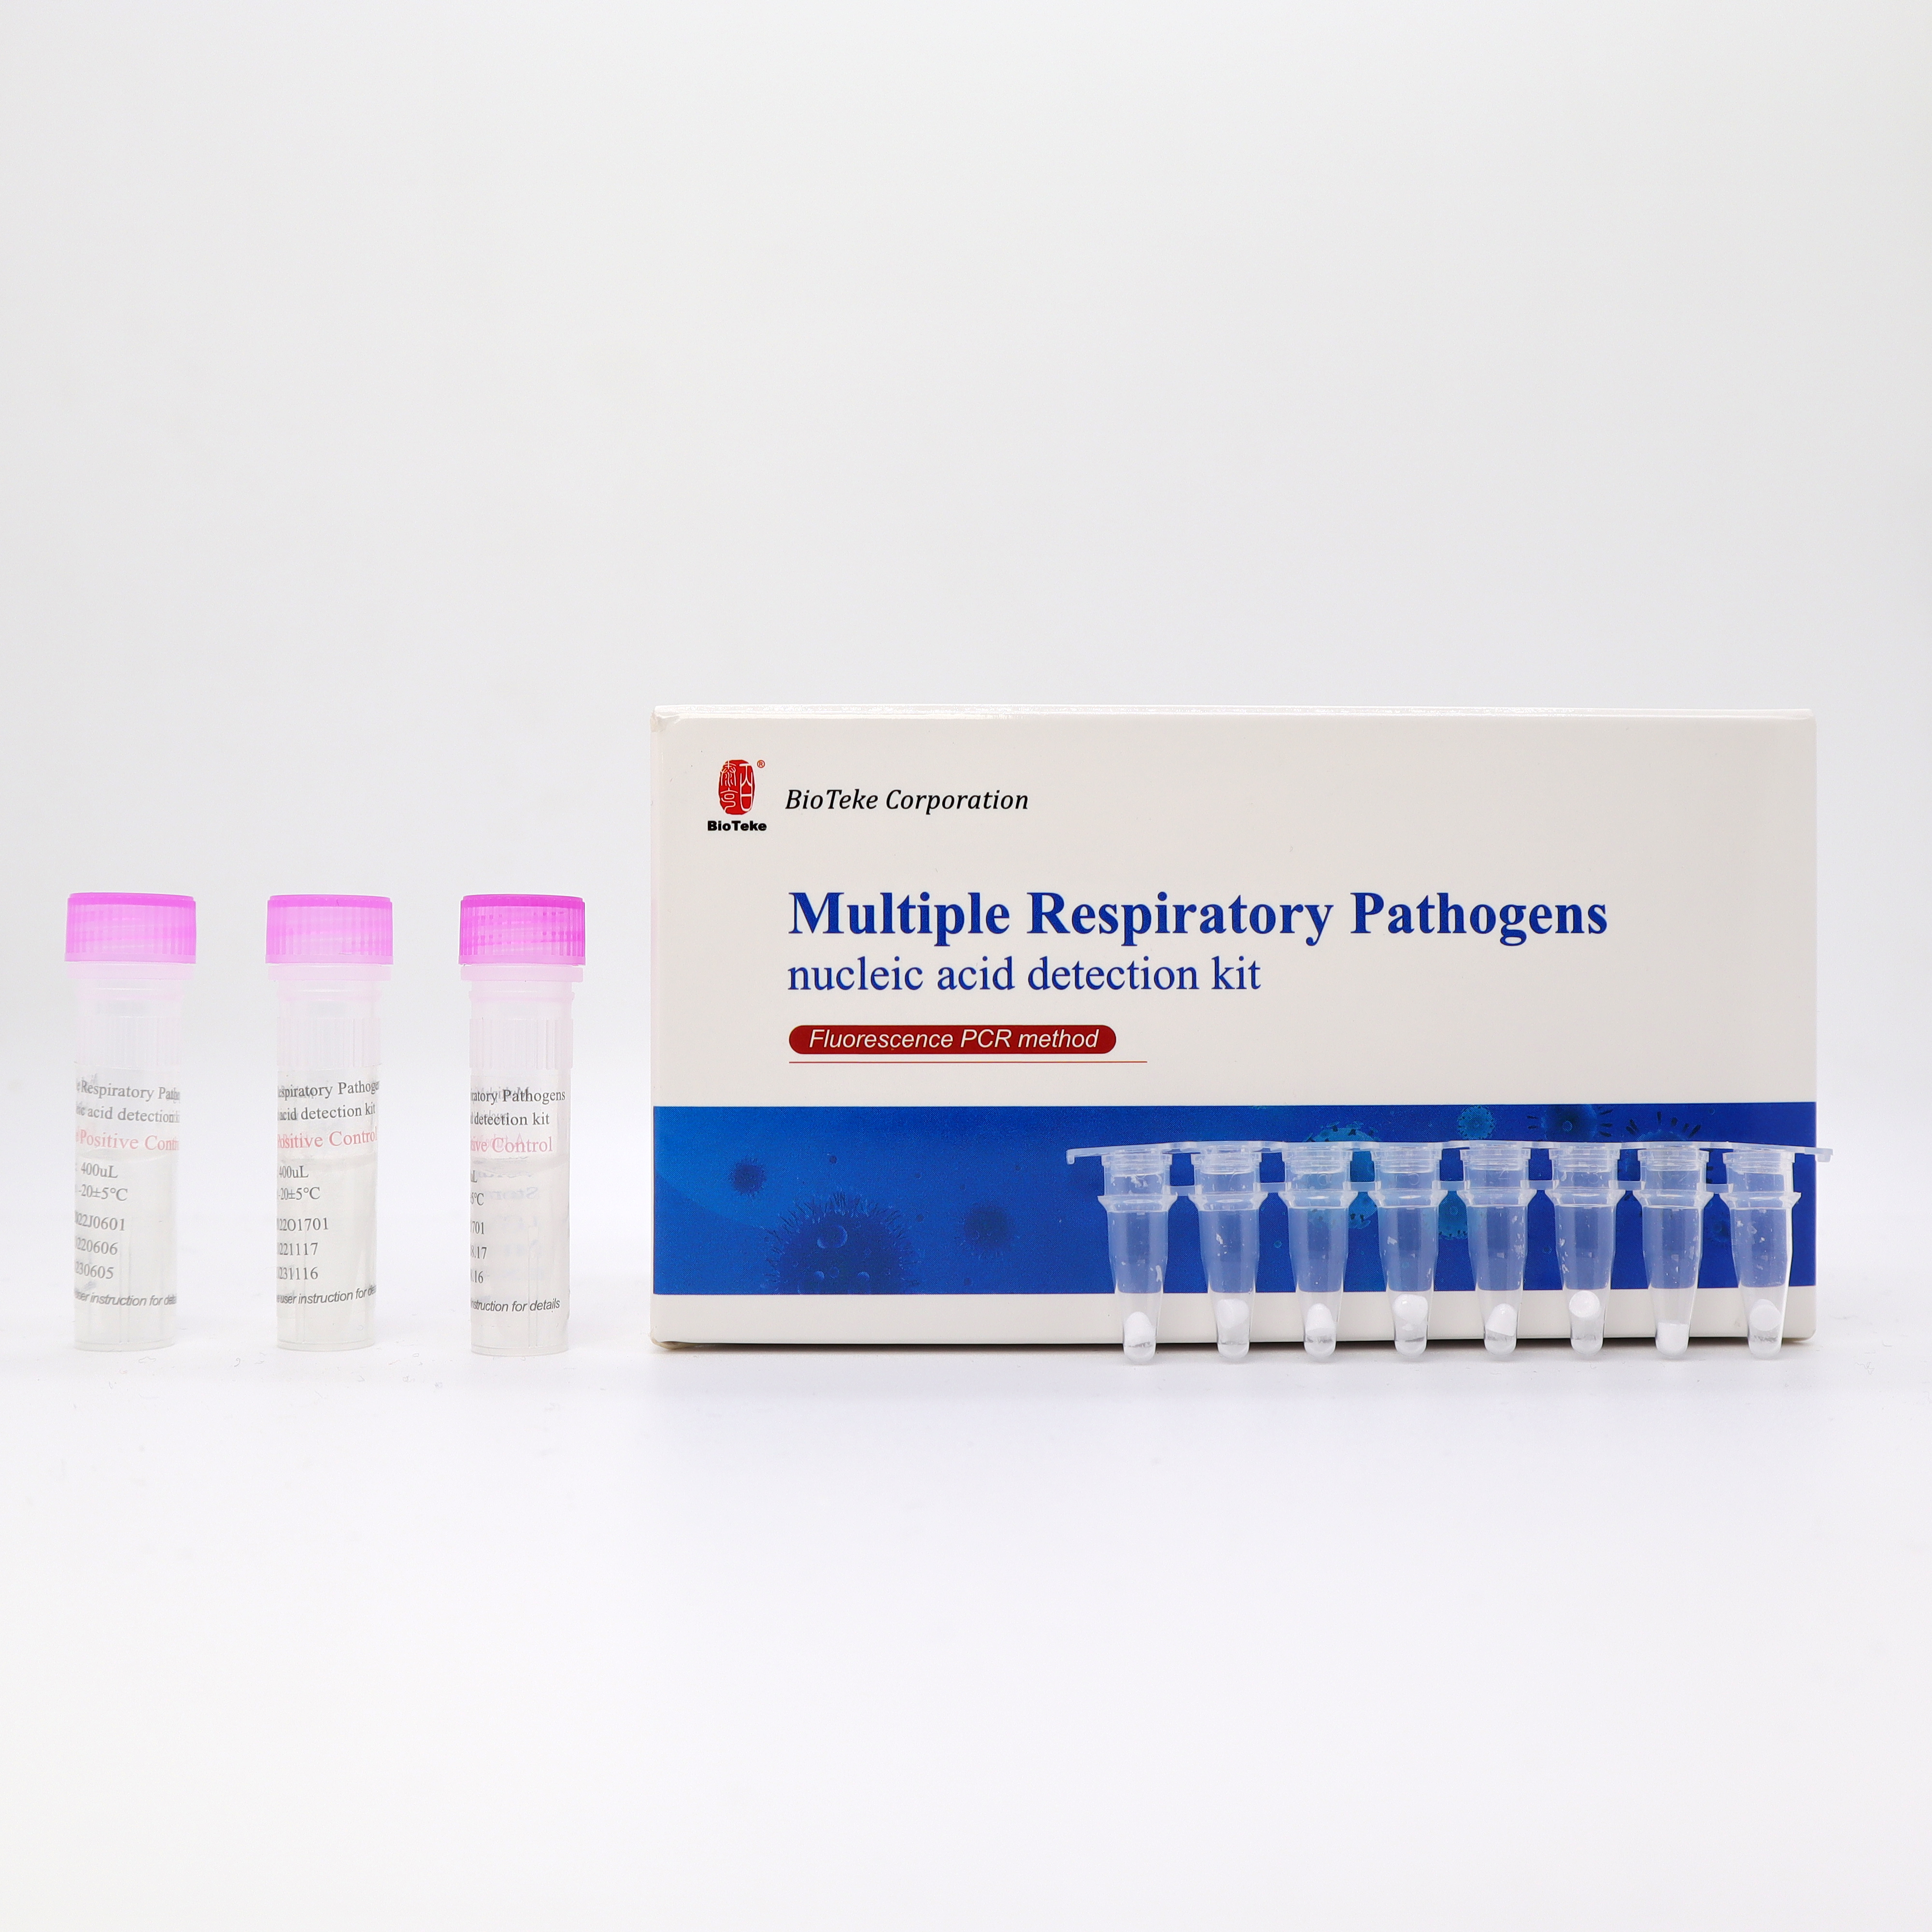 Multiple Respiratory Pathogens Nucleic Acid Detection Kit (Fluorescence PCR Method)